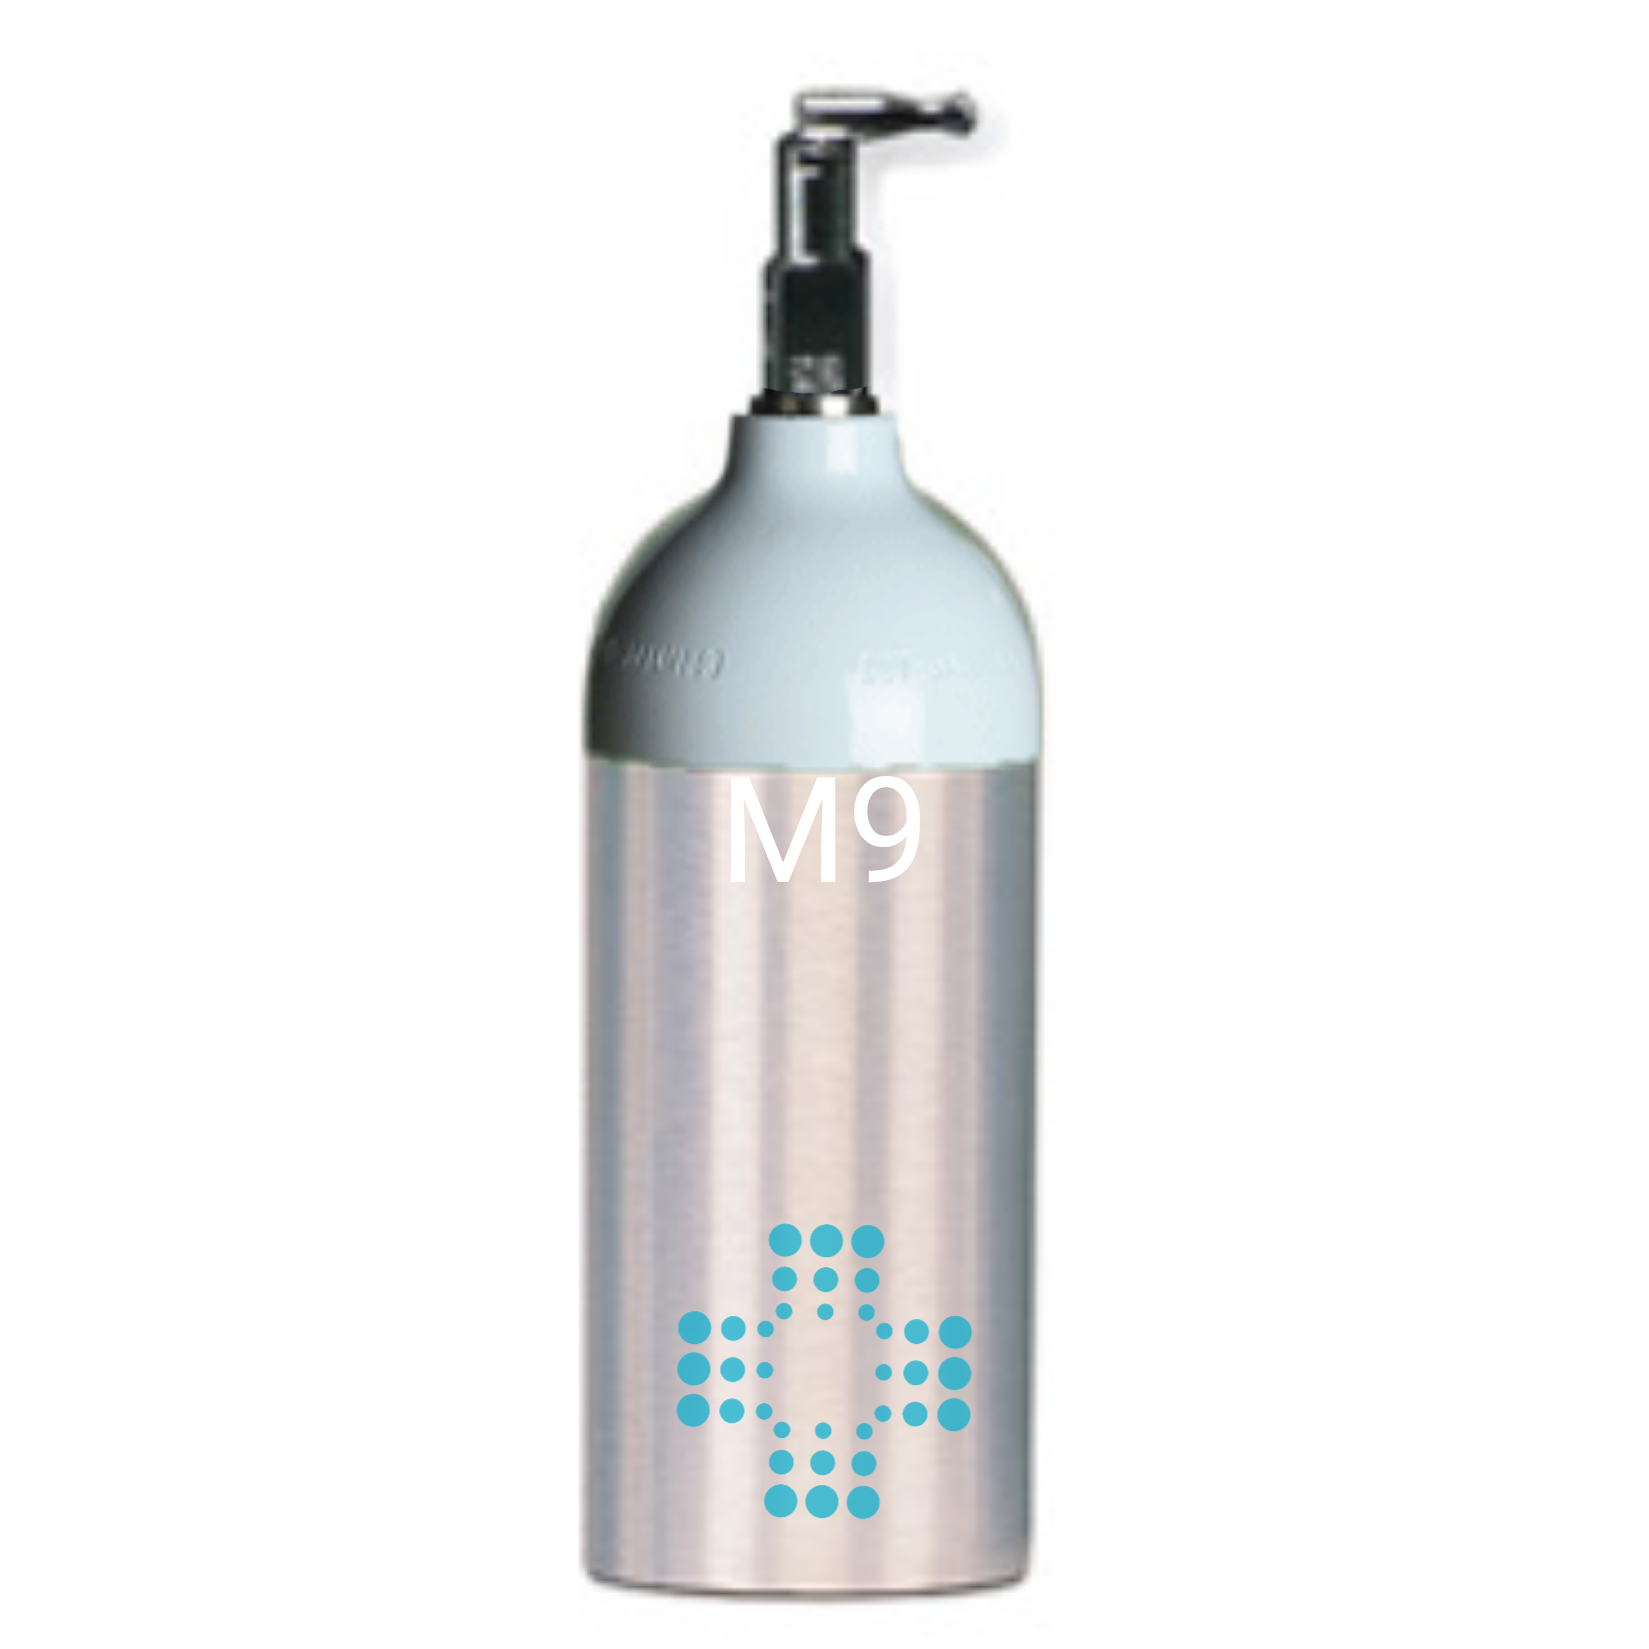 M9 oxygen tank cylinder